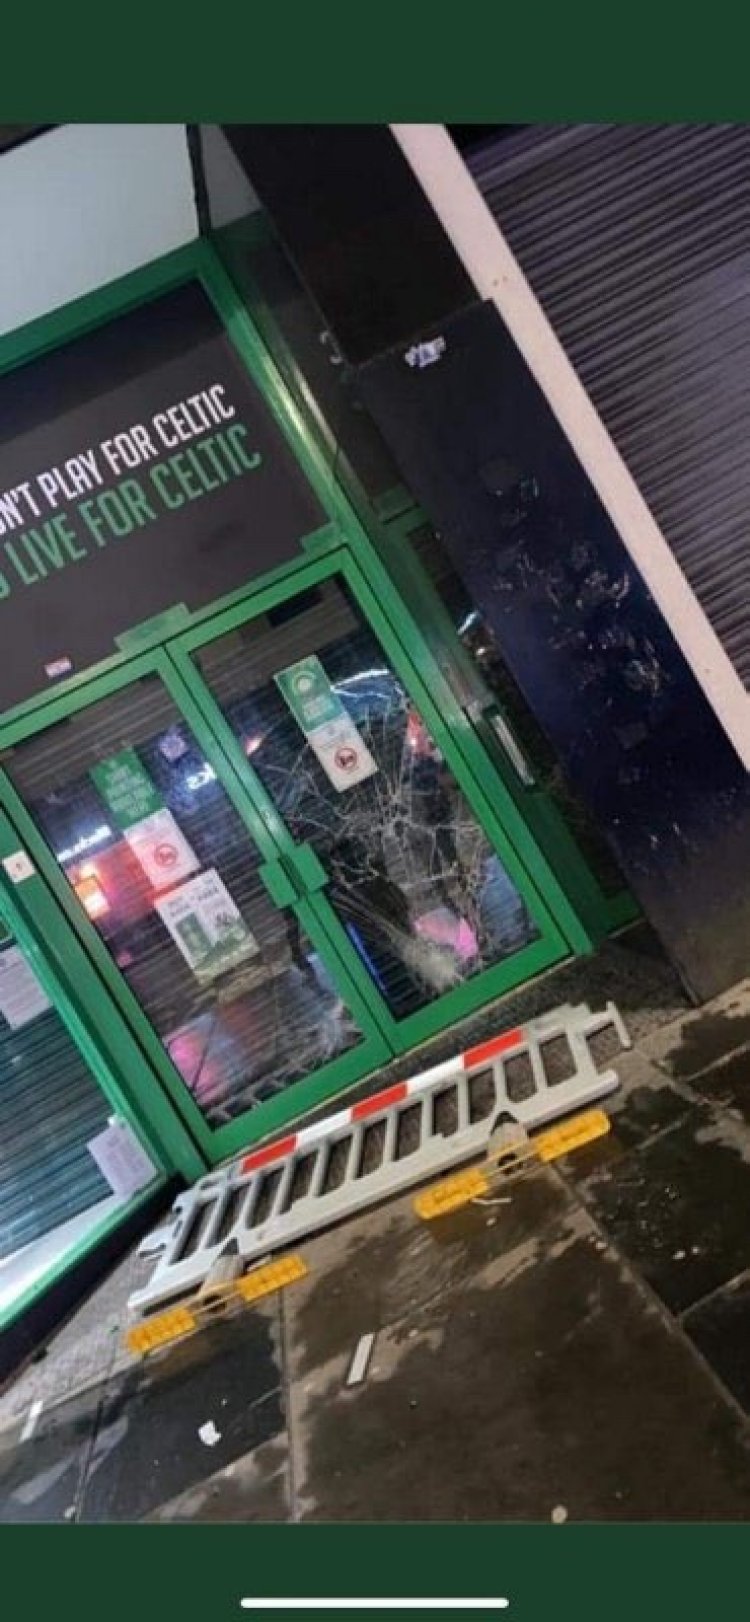 Celtic’s City Centre Store Vandalised